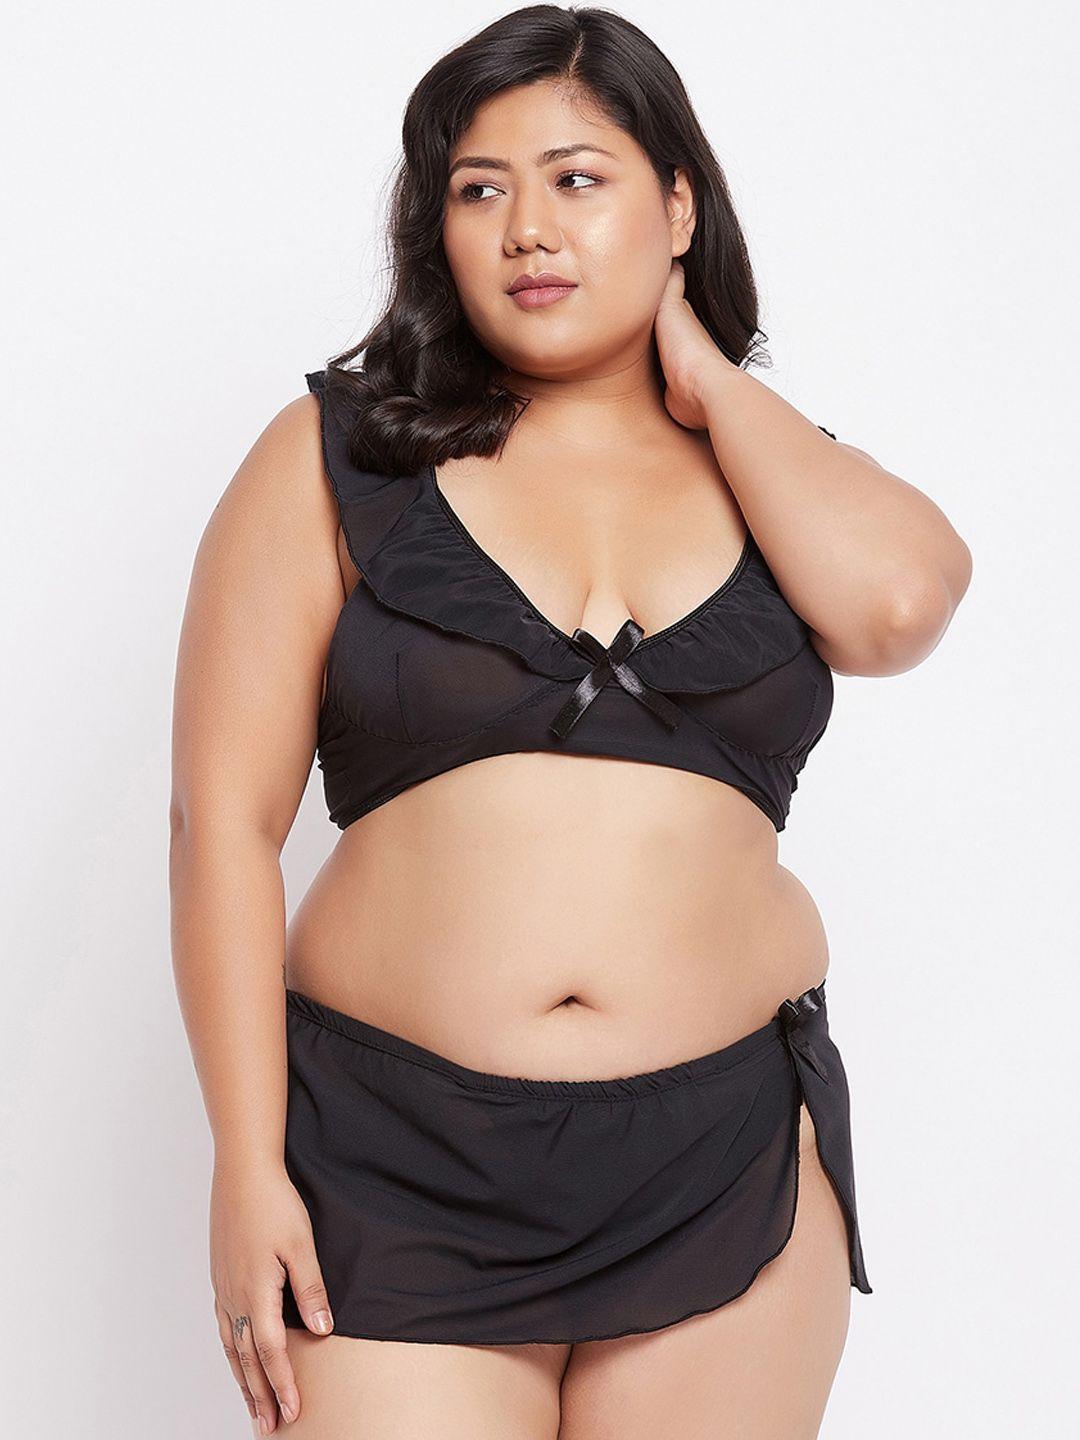 curves by zerokaata women plus size sheer lingerie set